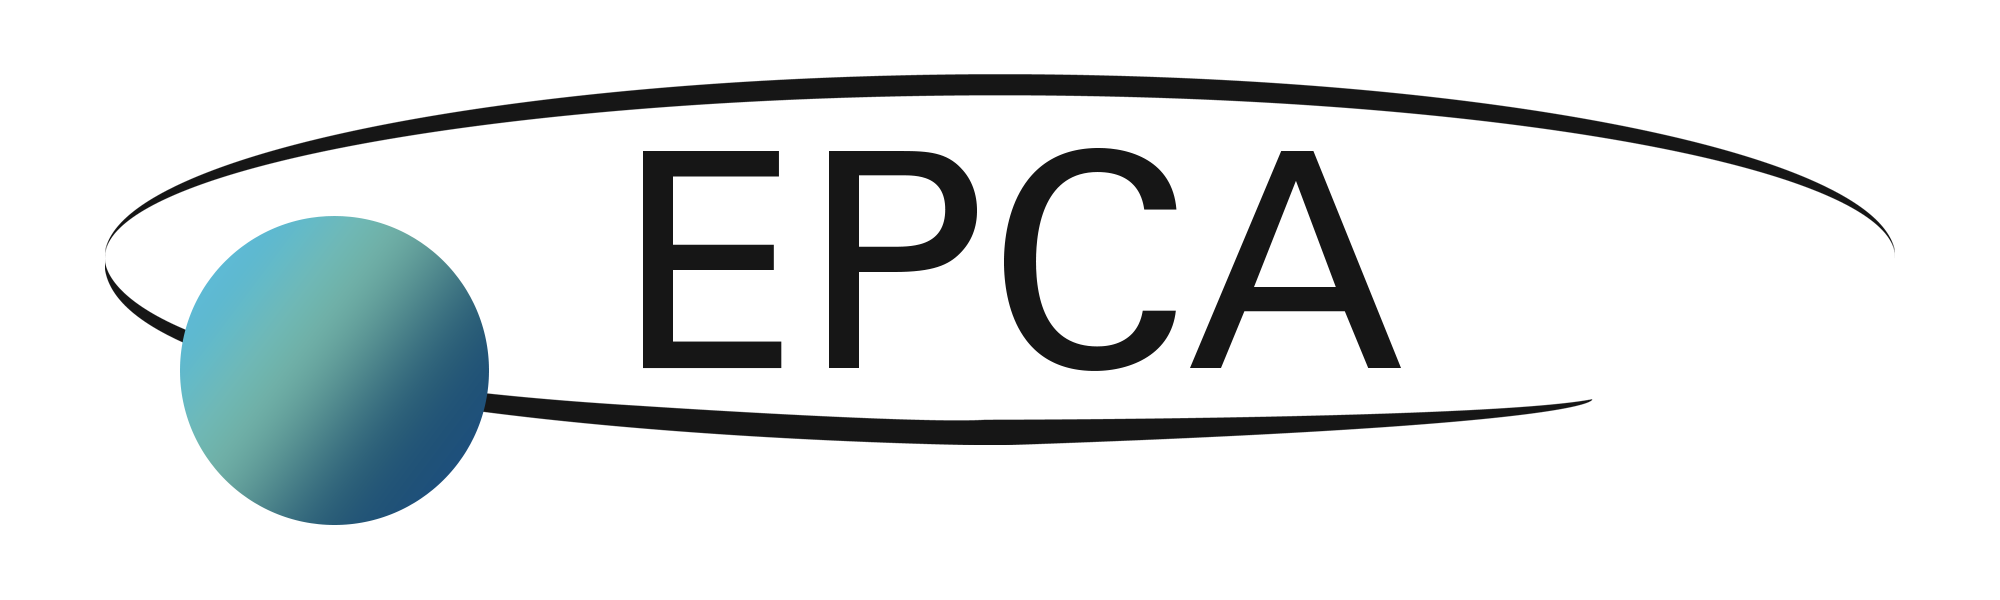 EPCA Logo